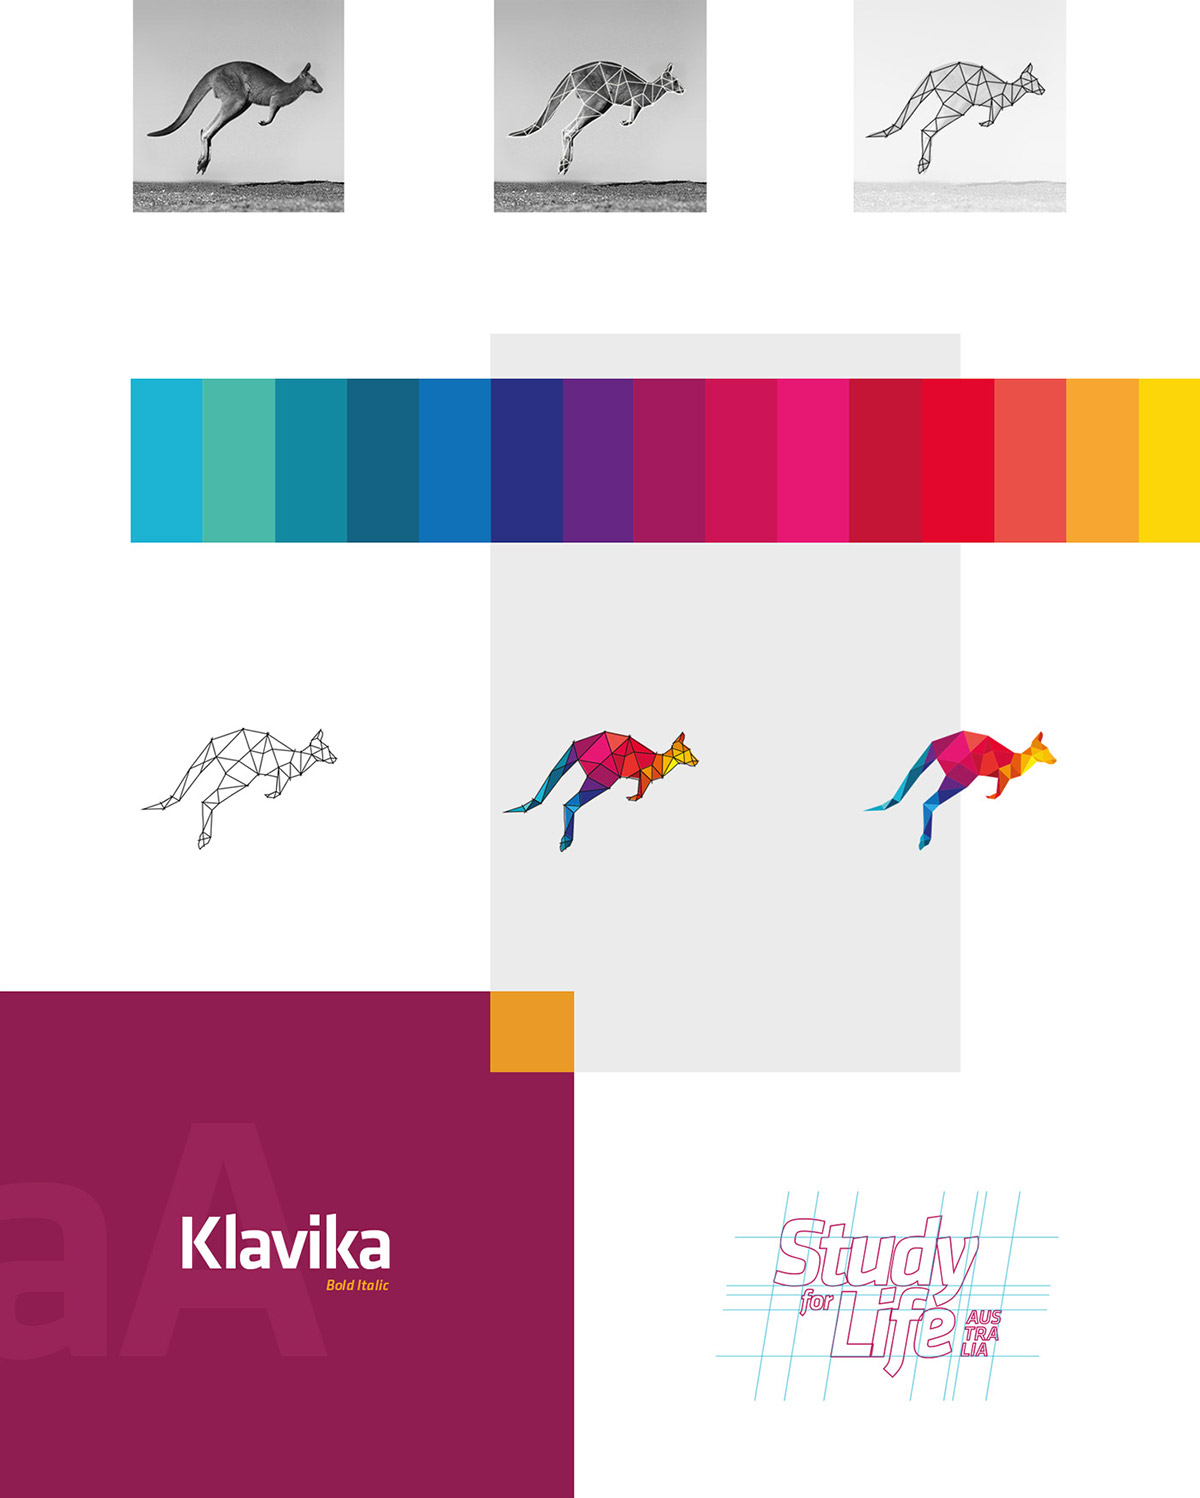 Australia kangaroo canguru design modern logo identity identidade visual style Website colors abstract school english exchange